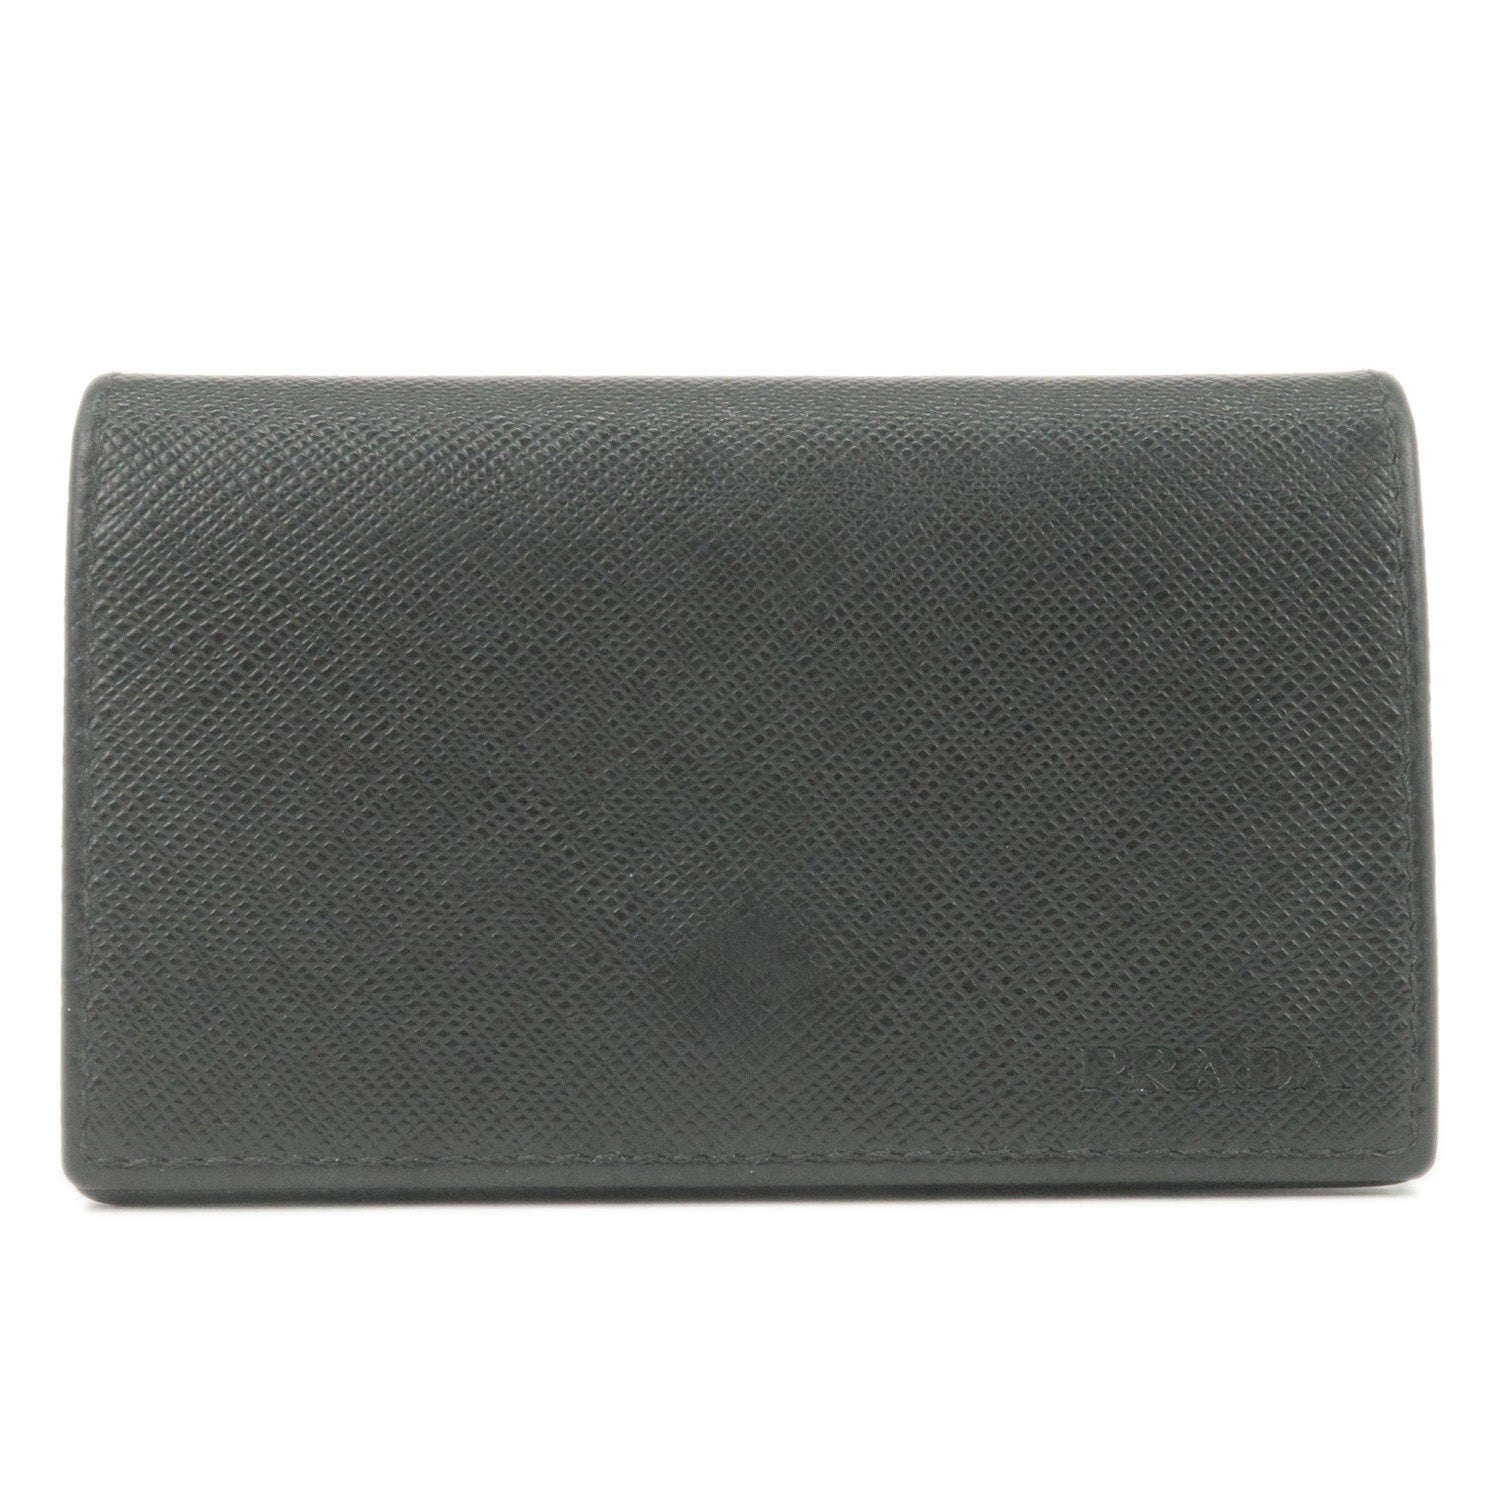 PRADA-Logo-Leather-Card-Case-Card-Holder-NERO-Black